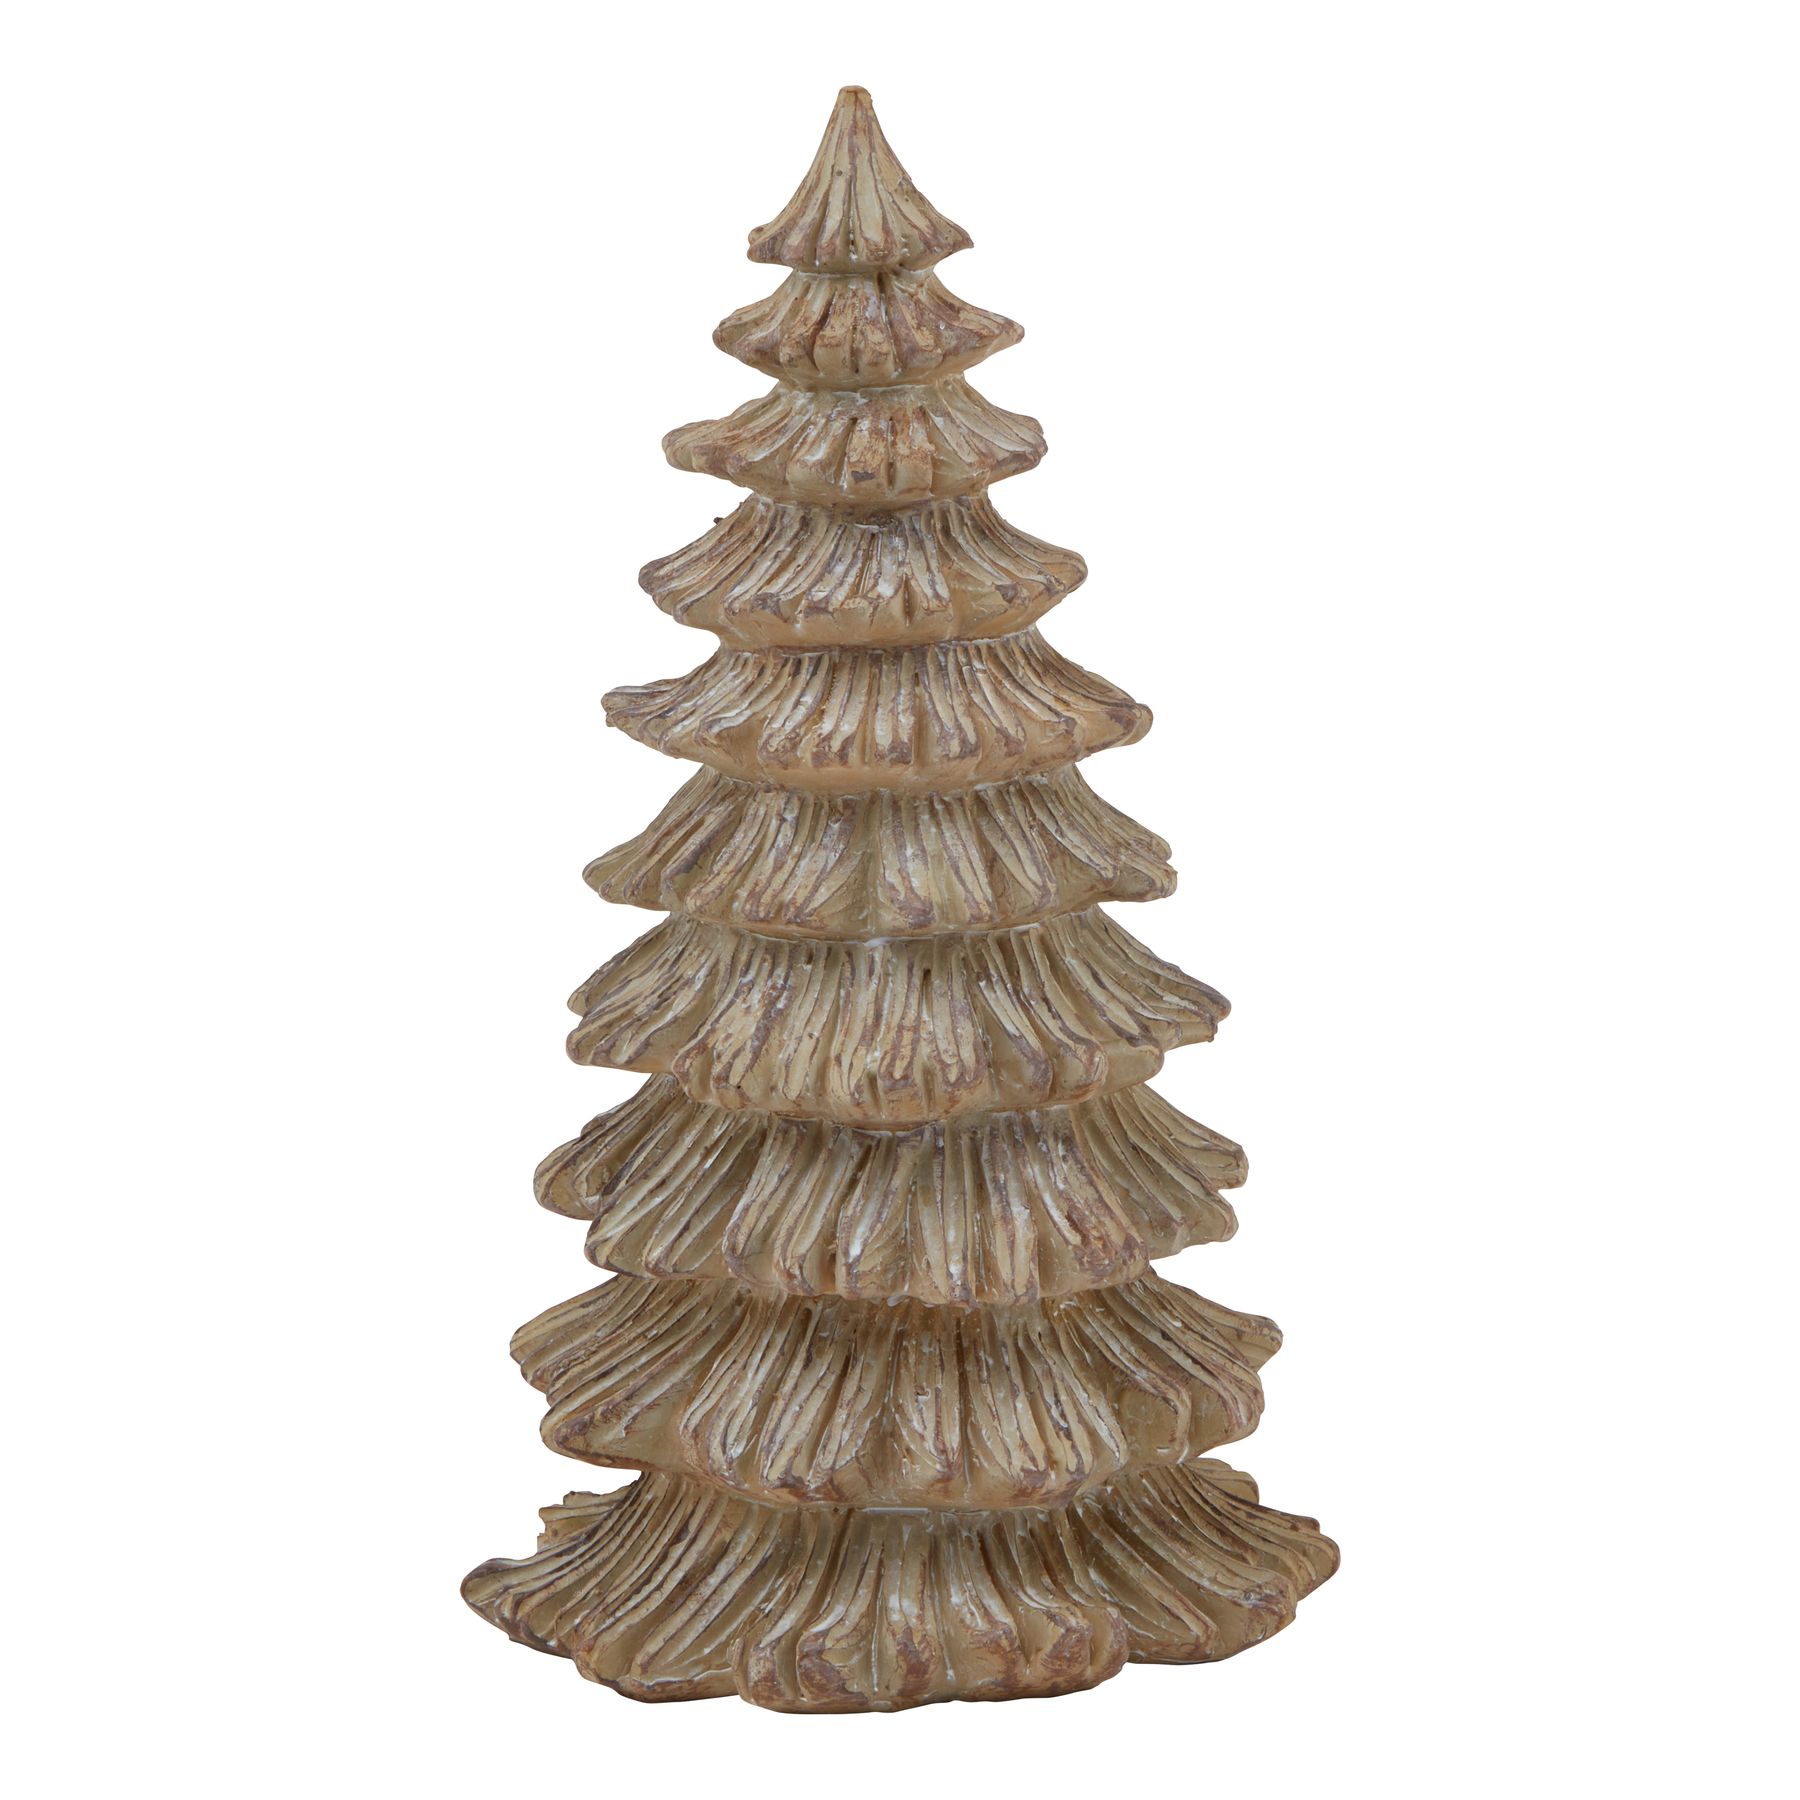 Medium Pine Tree Sculpture - Image 1